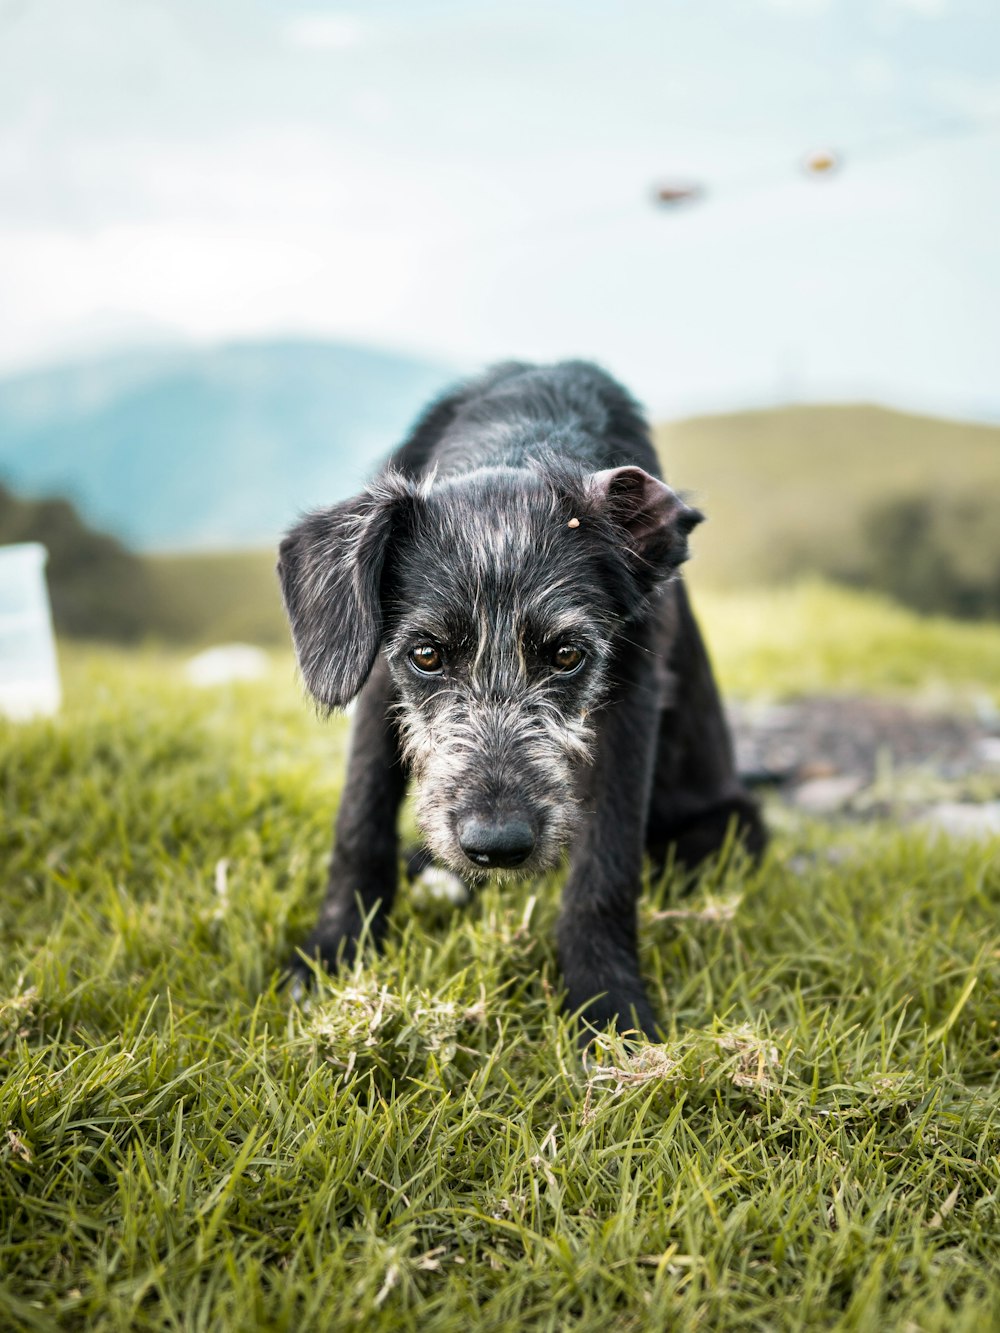 black and white short coat medium sized dog on green grass during daytime